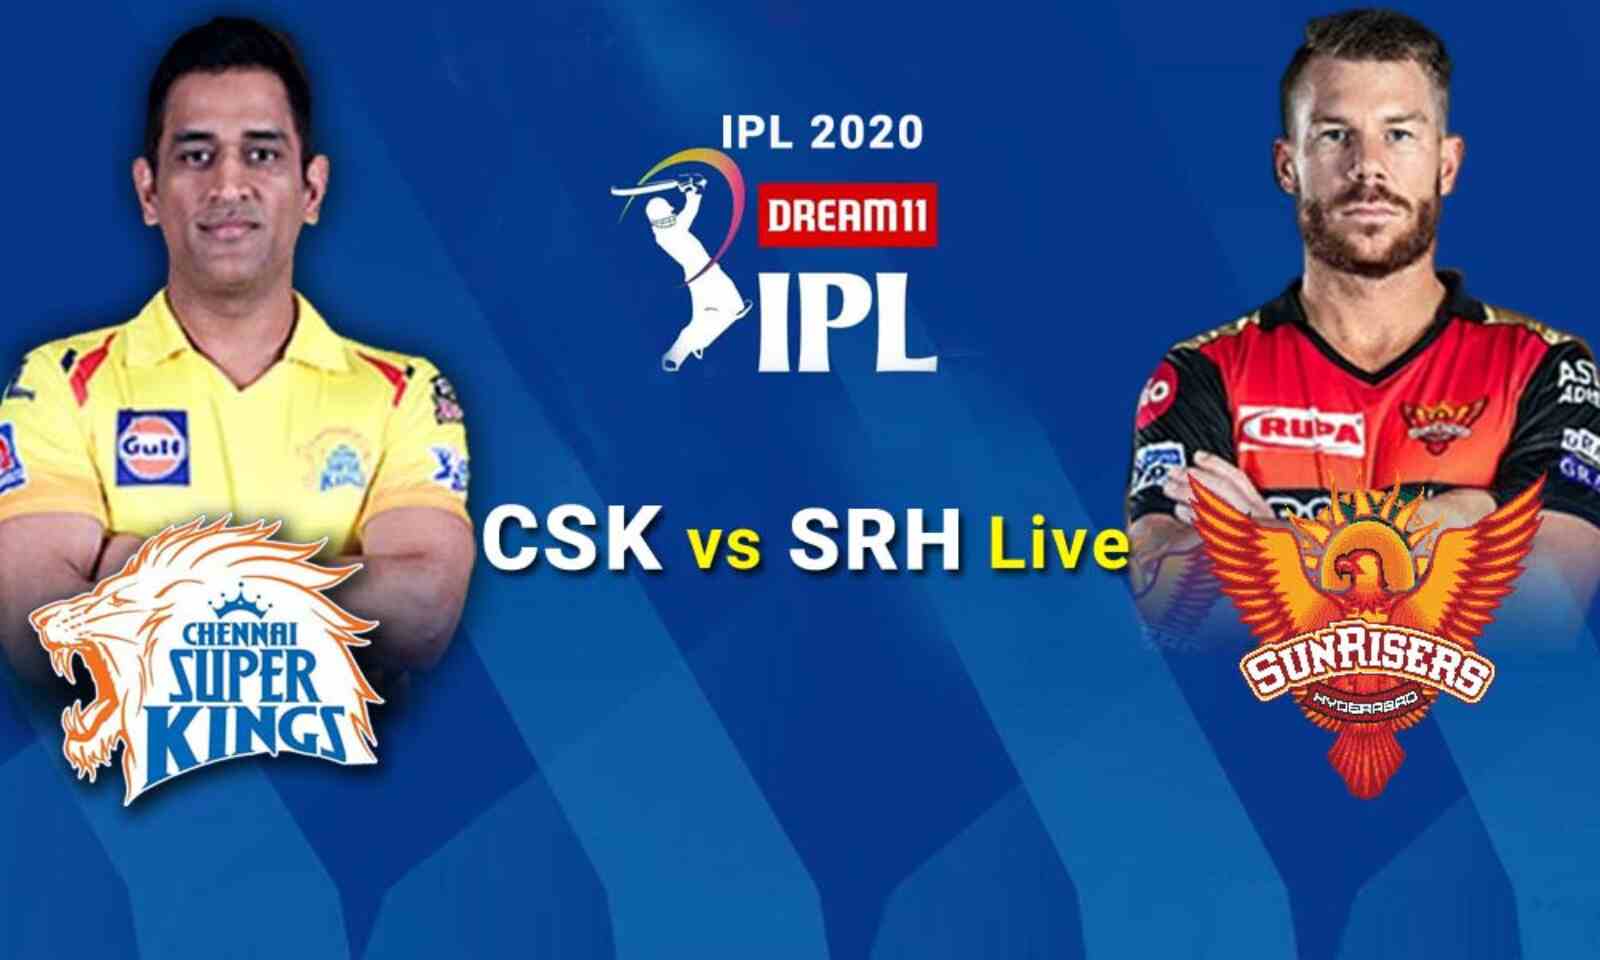 CSK vs SRH Live Cricket Score, IPL 2020 Match Today Sunrisers Hyderabad win by 7 runs